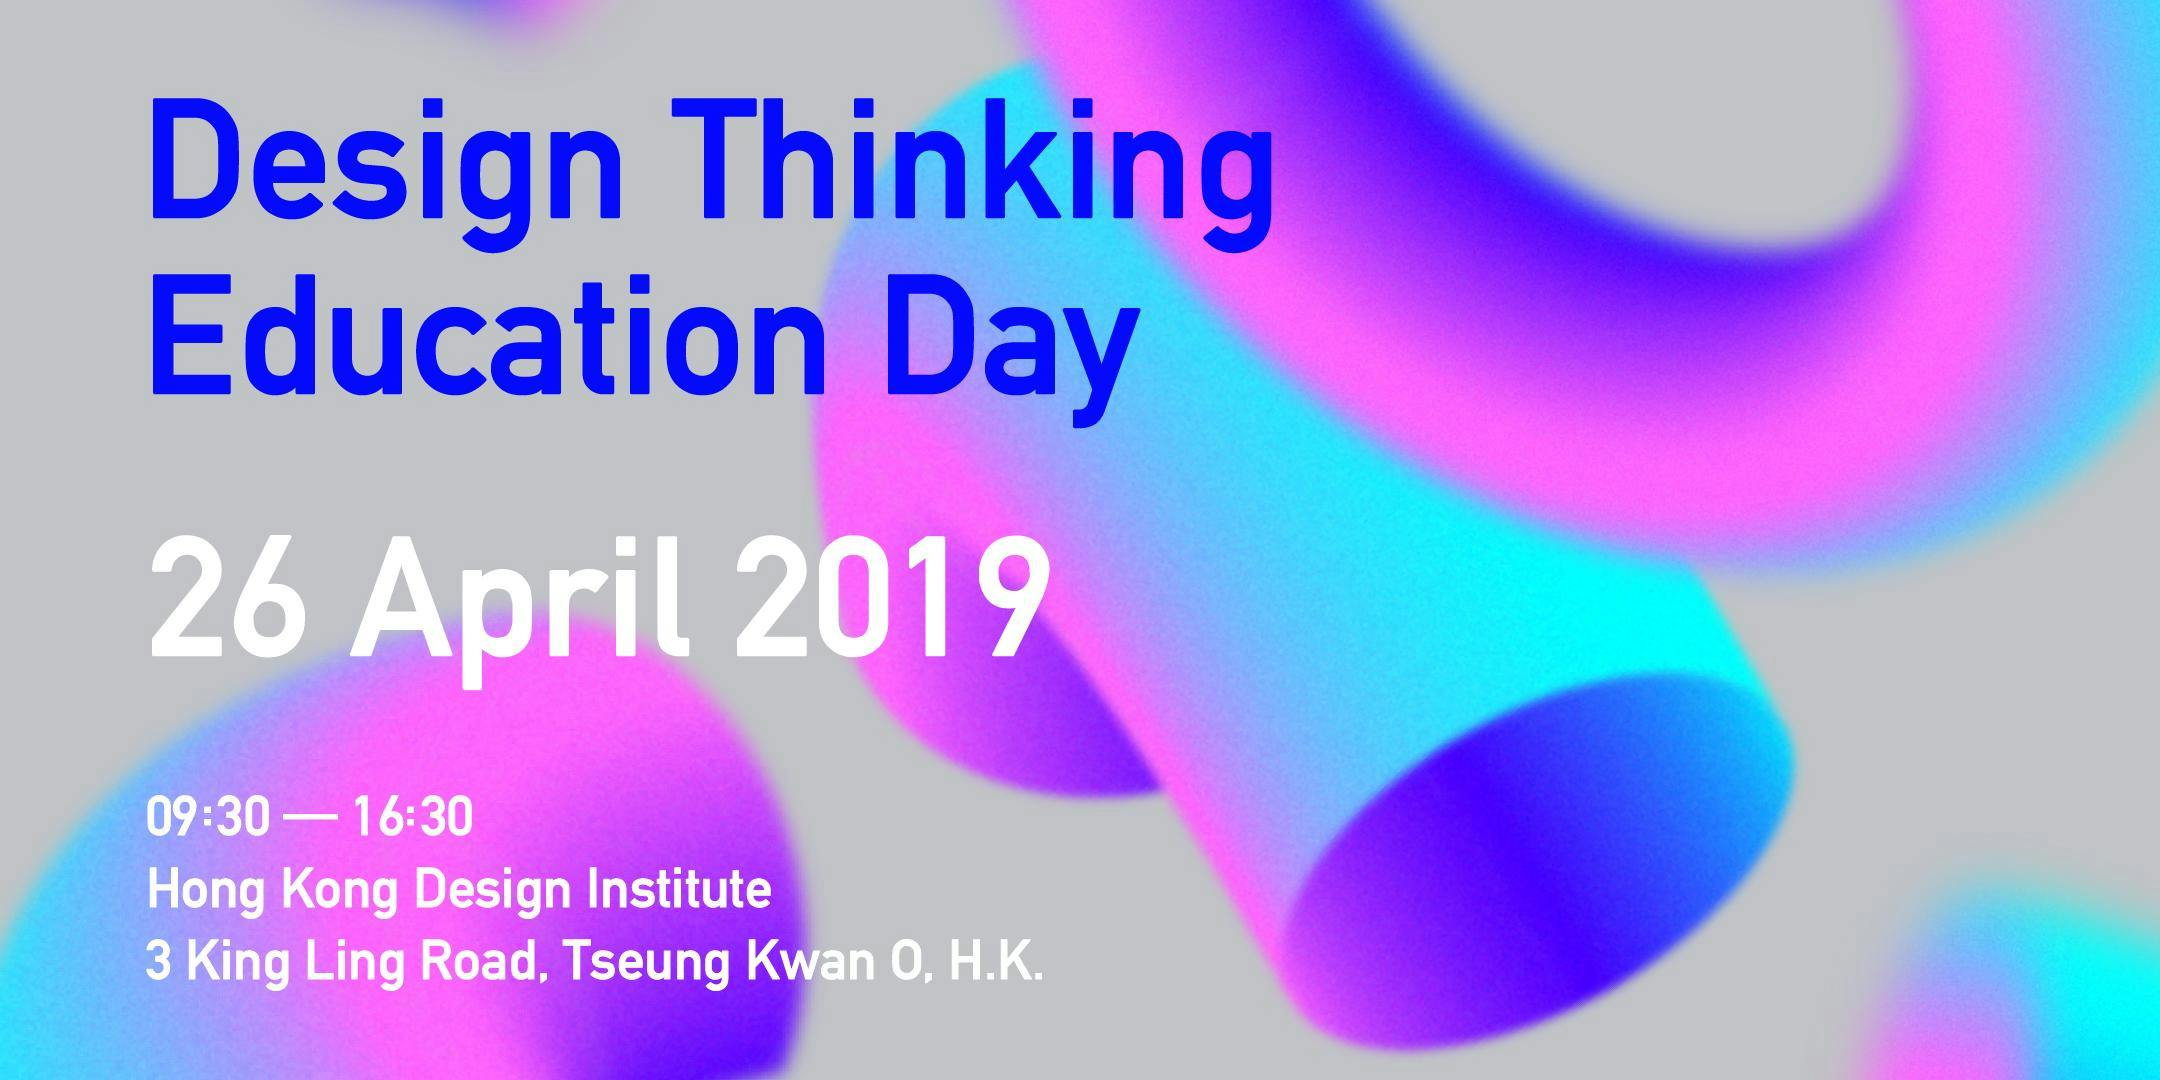 Design Thinking Education Day